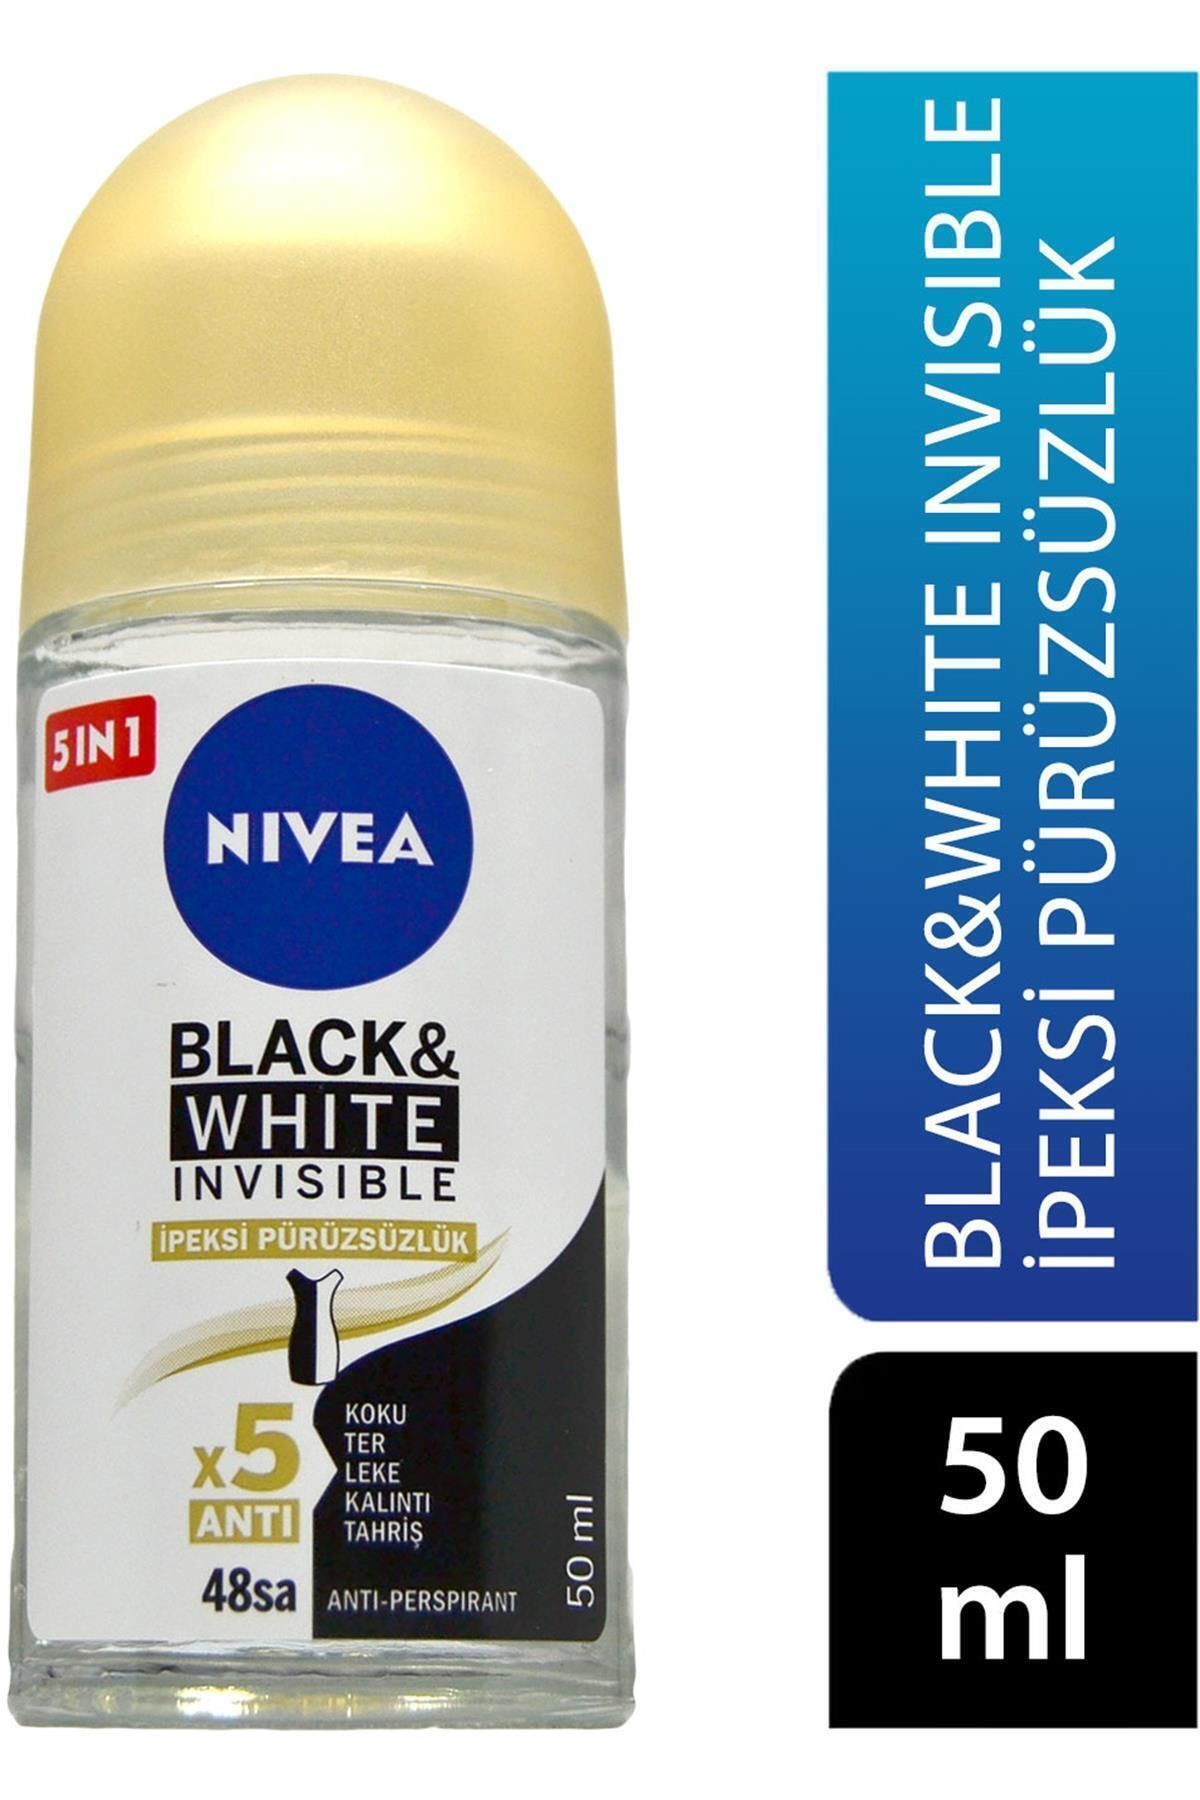 NIVEA Marka: Roll On 50 Ml Kadın Invisible Black&white Ipeksi Pürüzsüzlük 40060484 Kategori: Parfüm